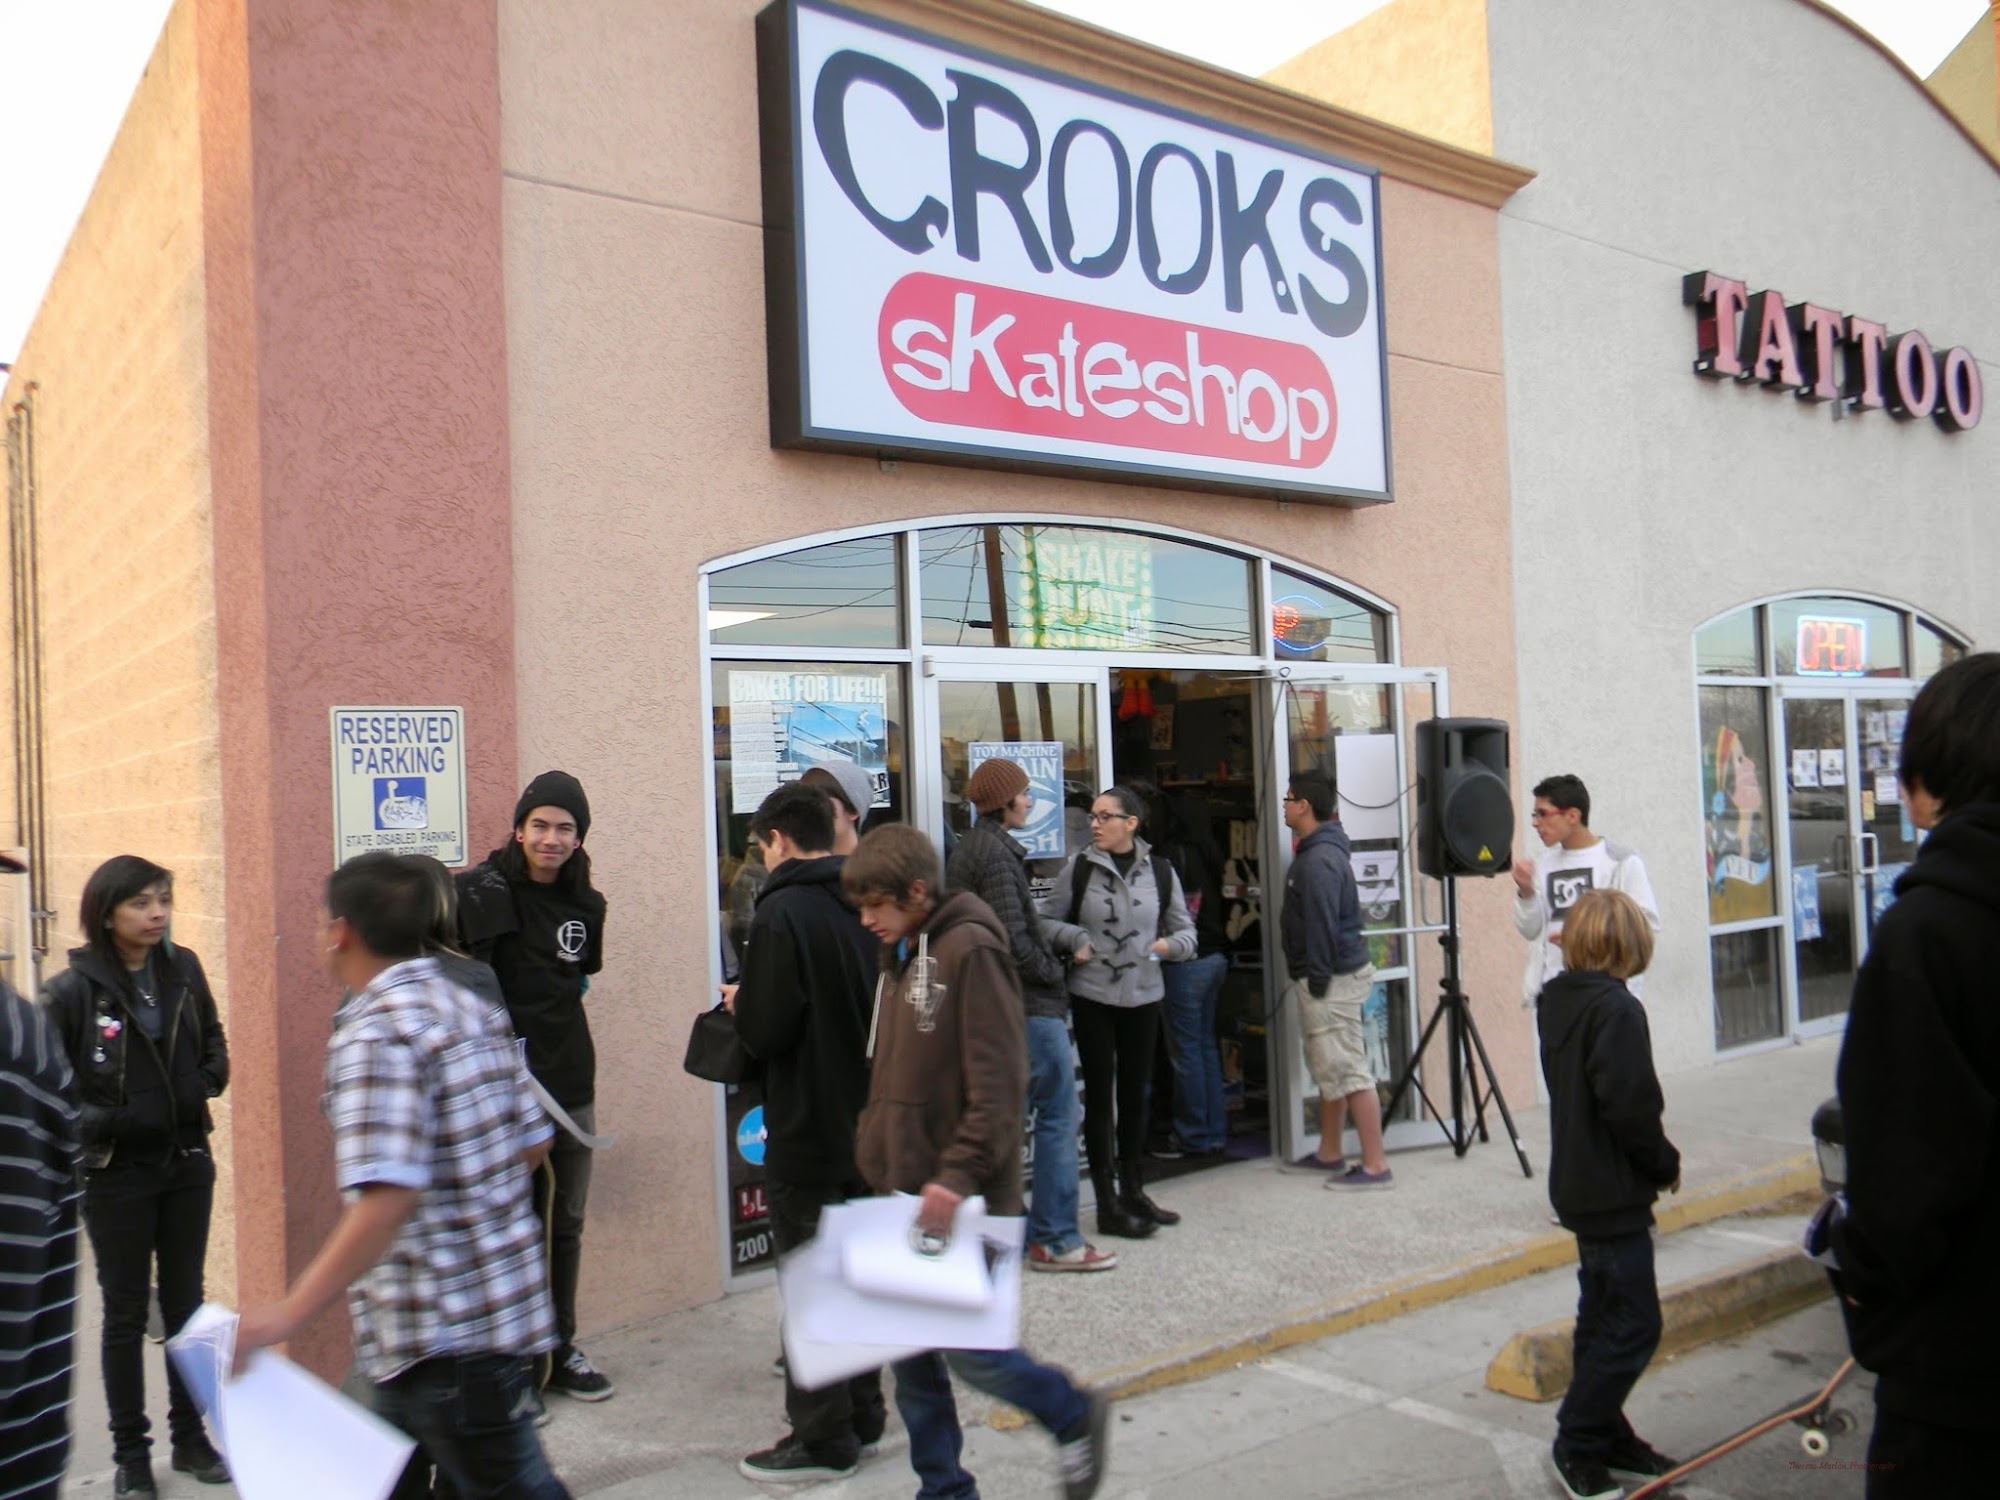 Crooks Skate Shop east